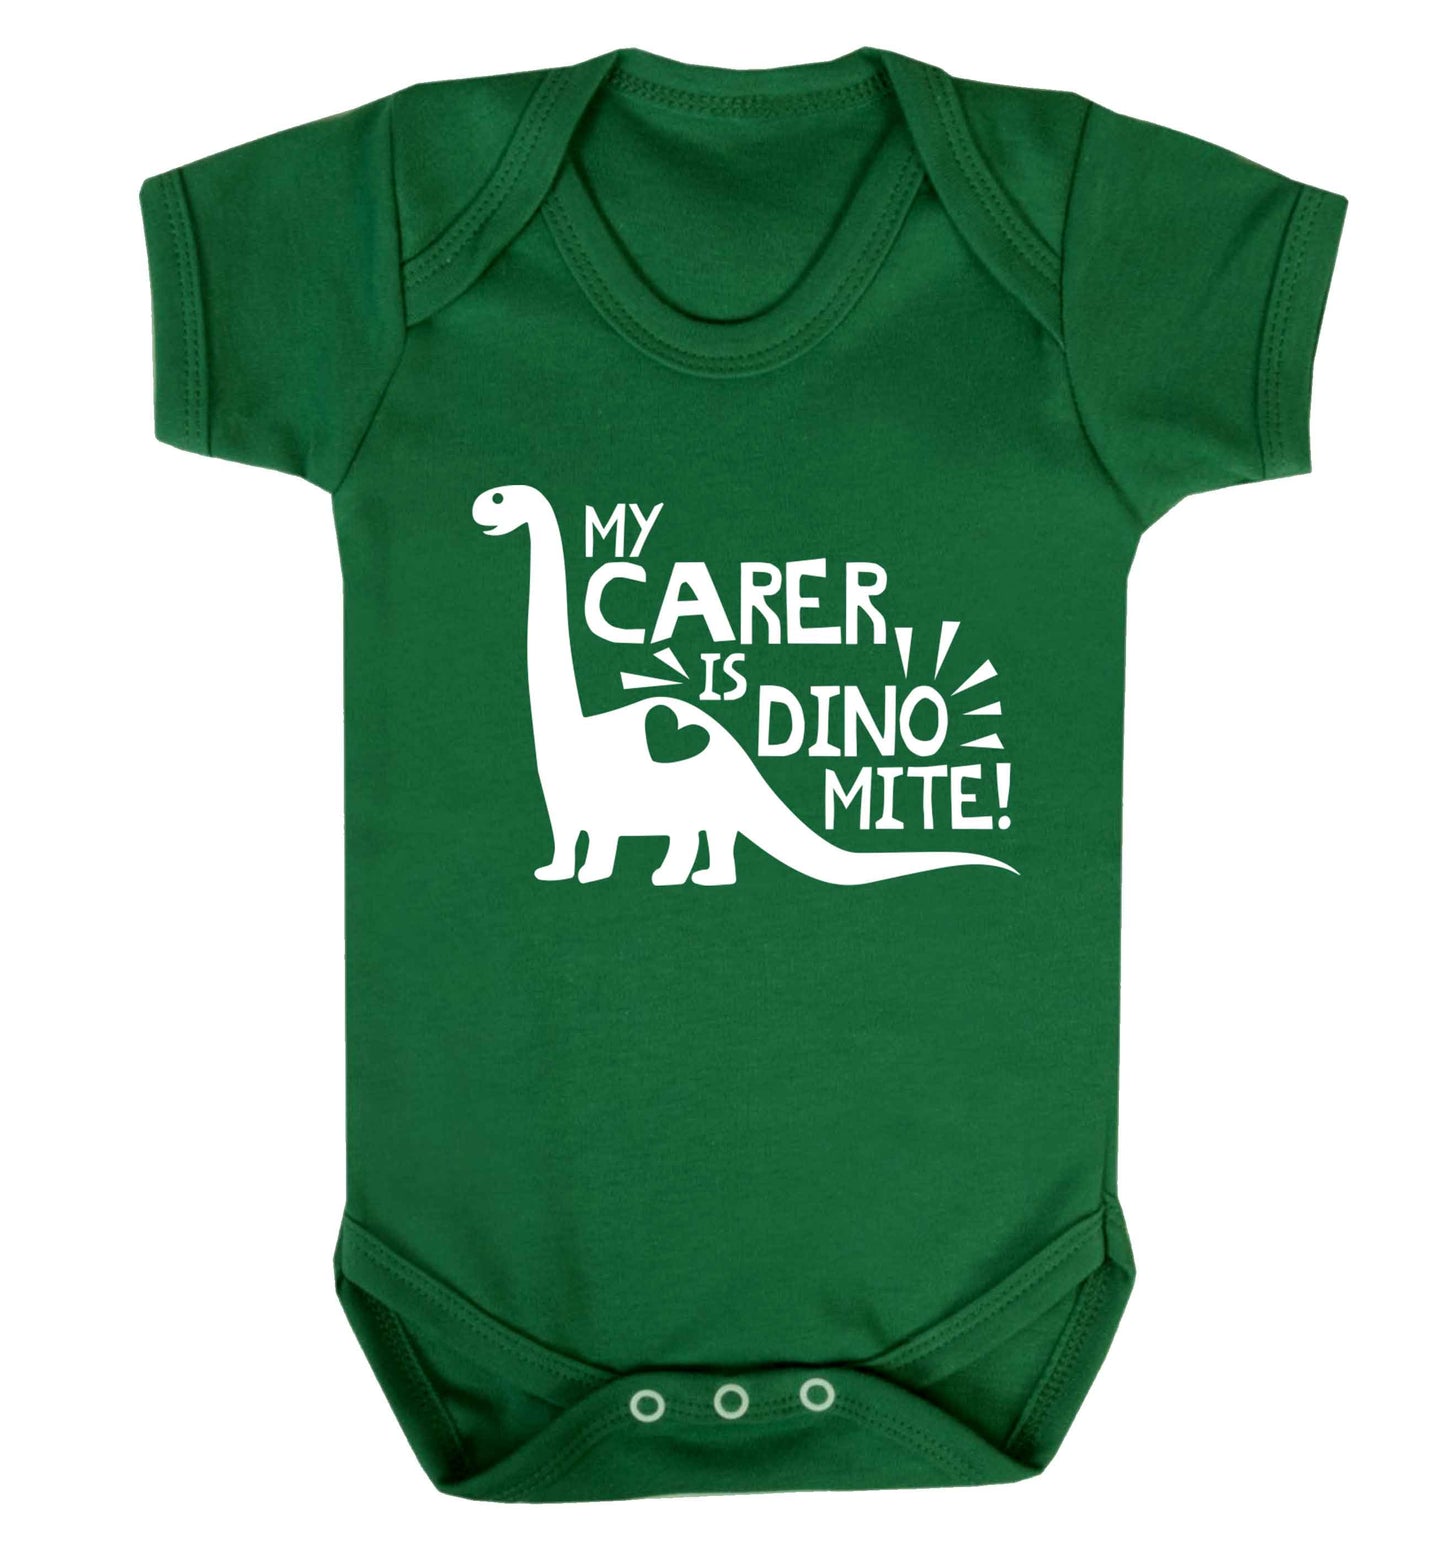 My carer is dinomite! Baby Vest green 18-24 months